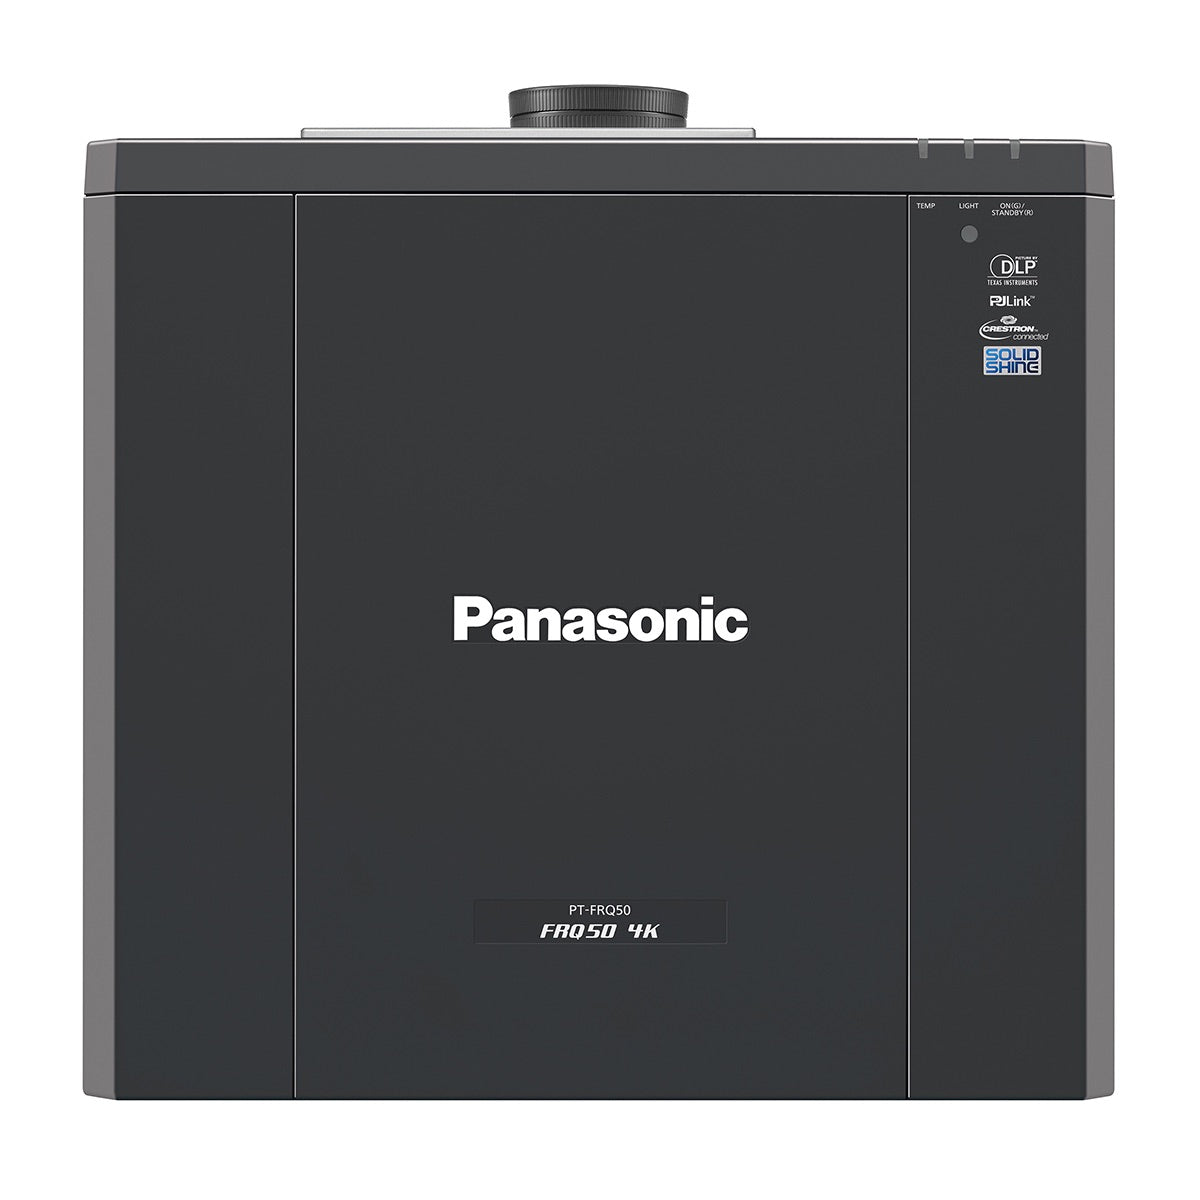 Panasonic PT-FRQ50 - 1-Chip DLP 4K Laser Projector, black, top